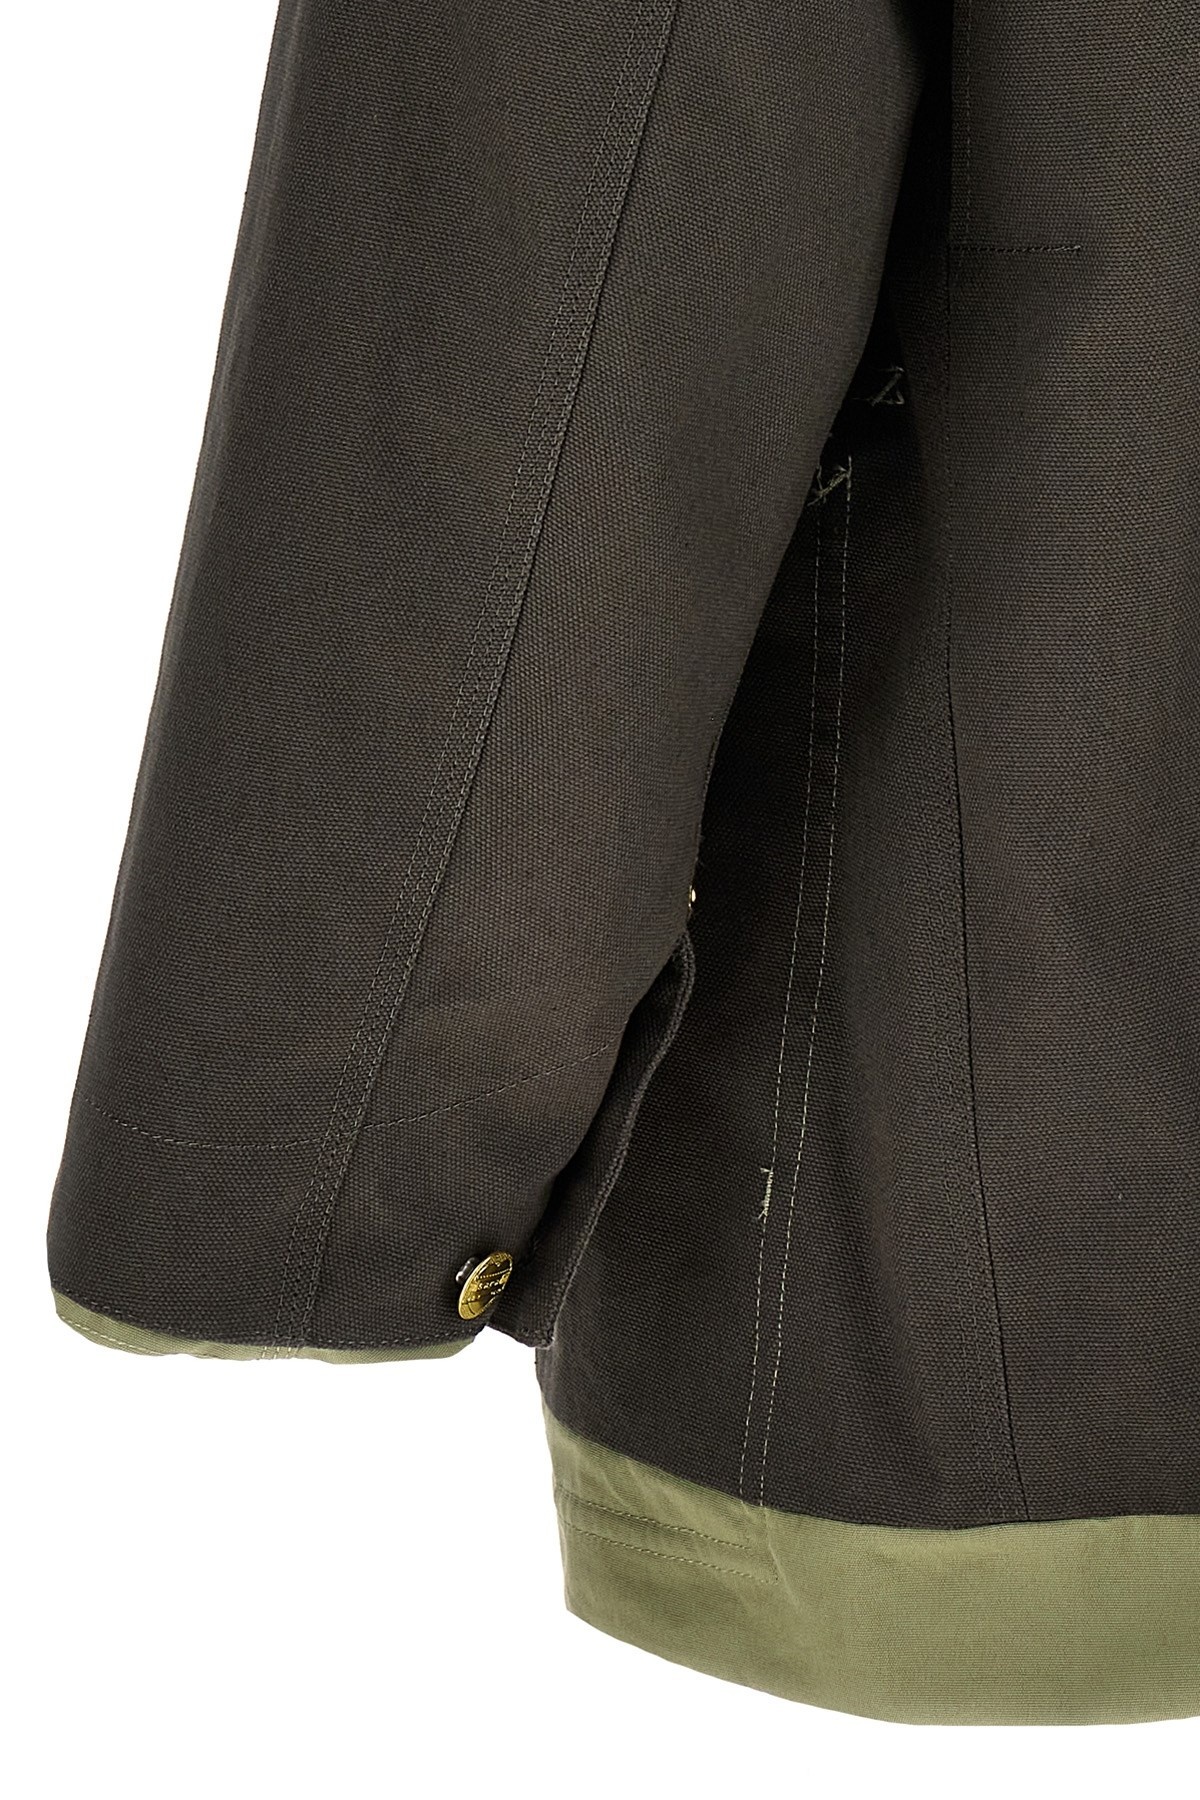 Sacai x Carhartt WIP reversible jacket - 5